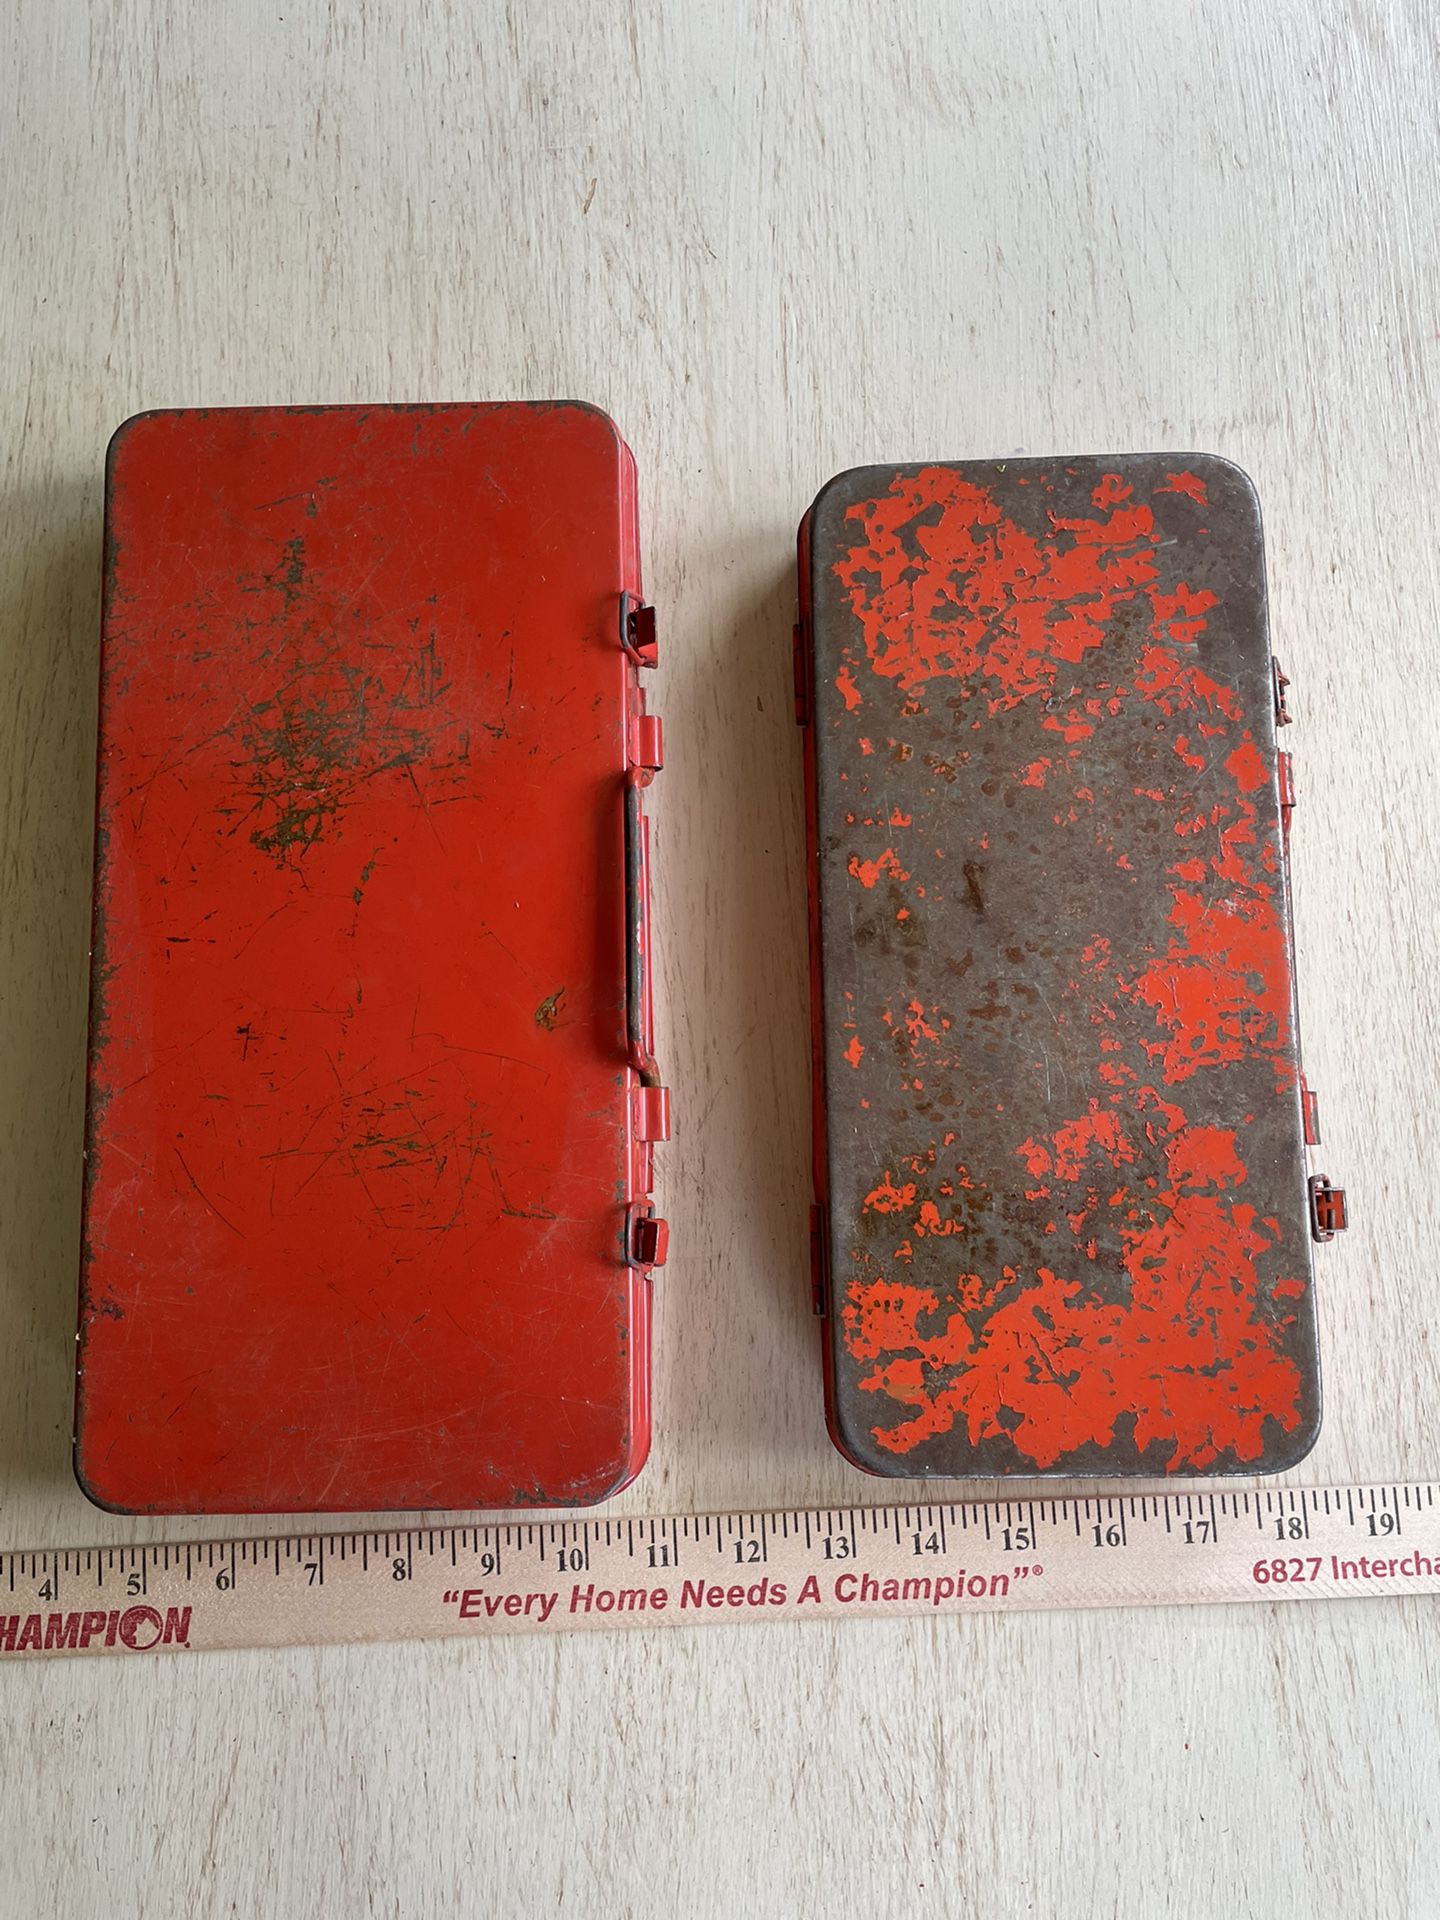 2 Vintage metal Sprocket Cases